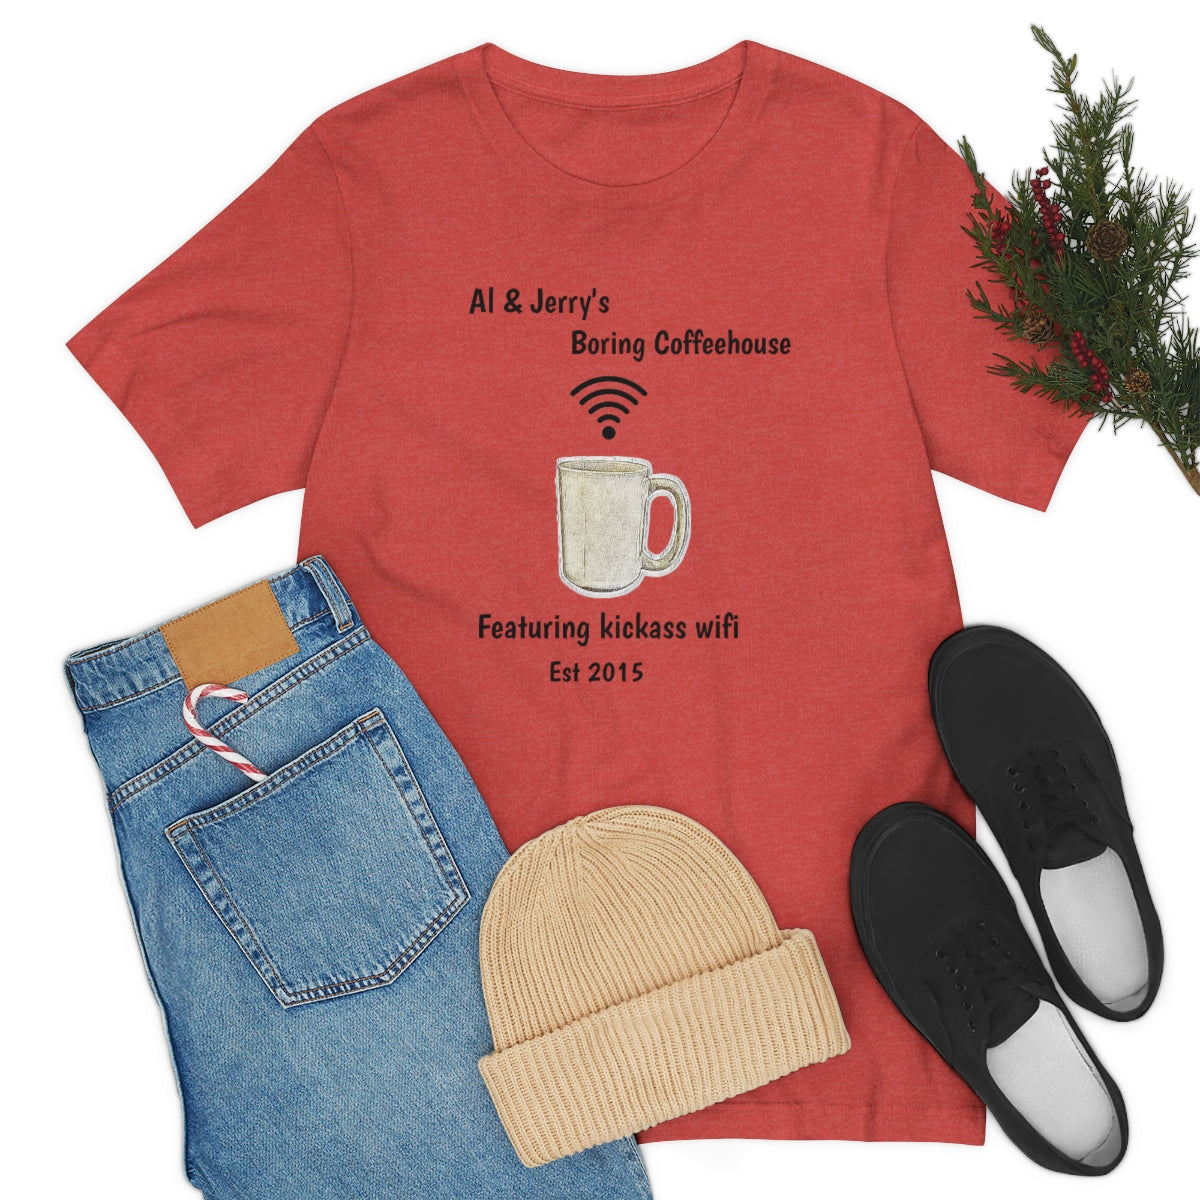 Al & Jerry "Boring Coffeehouse" Short Sleeve Tee